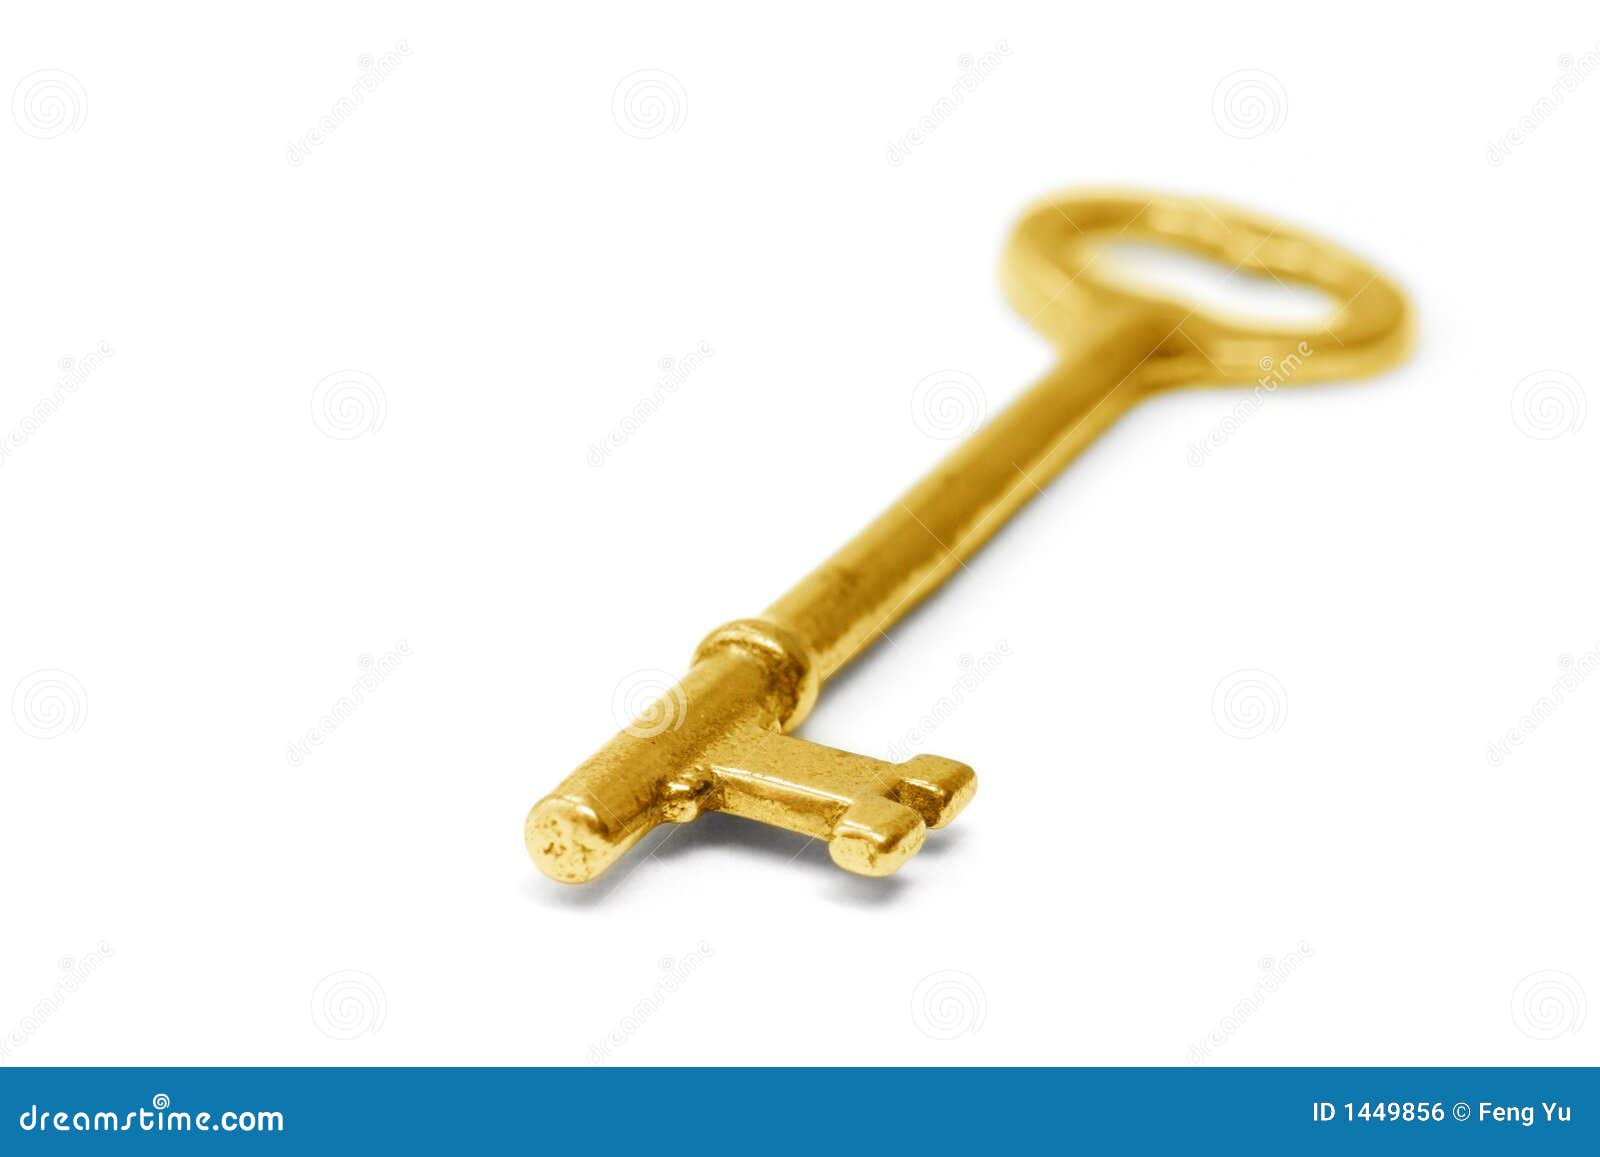 clipart keys to success - photo #46